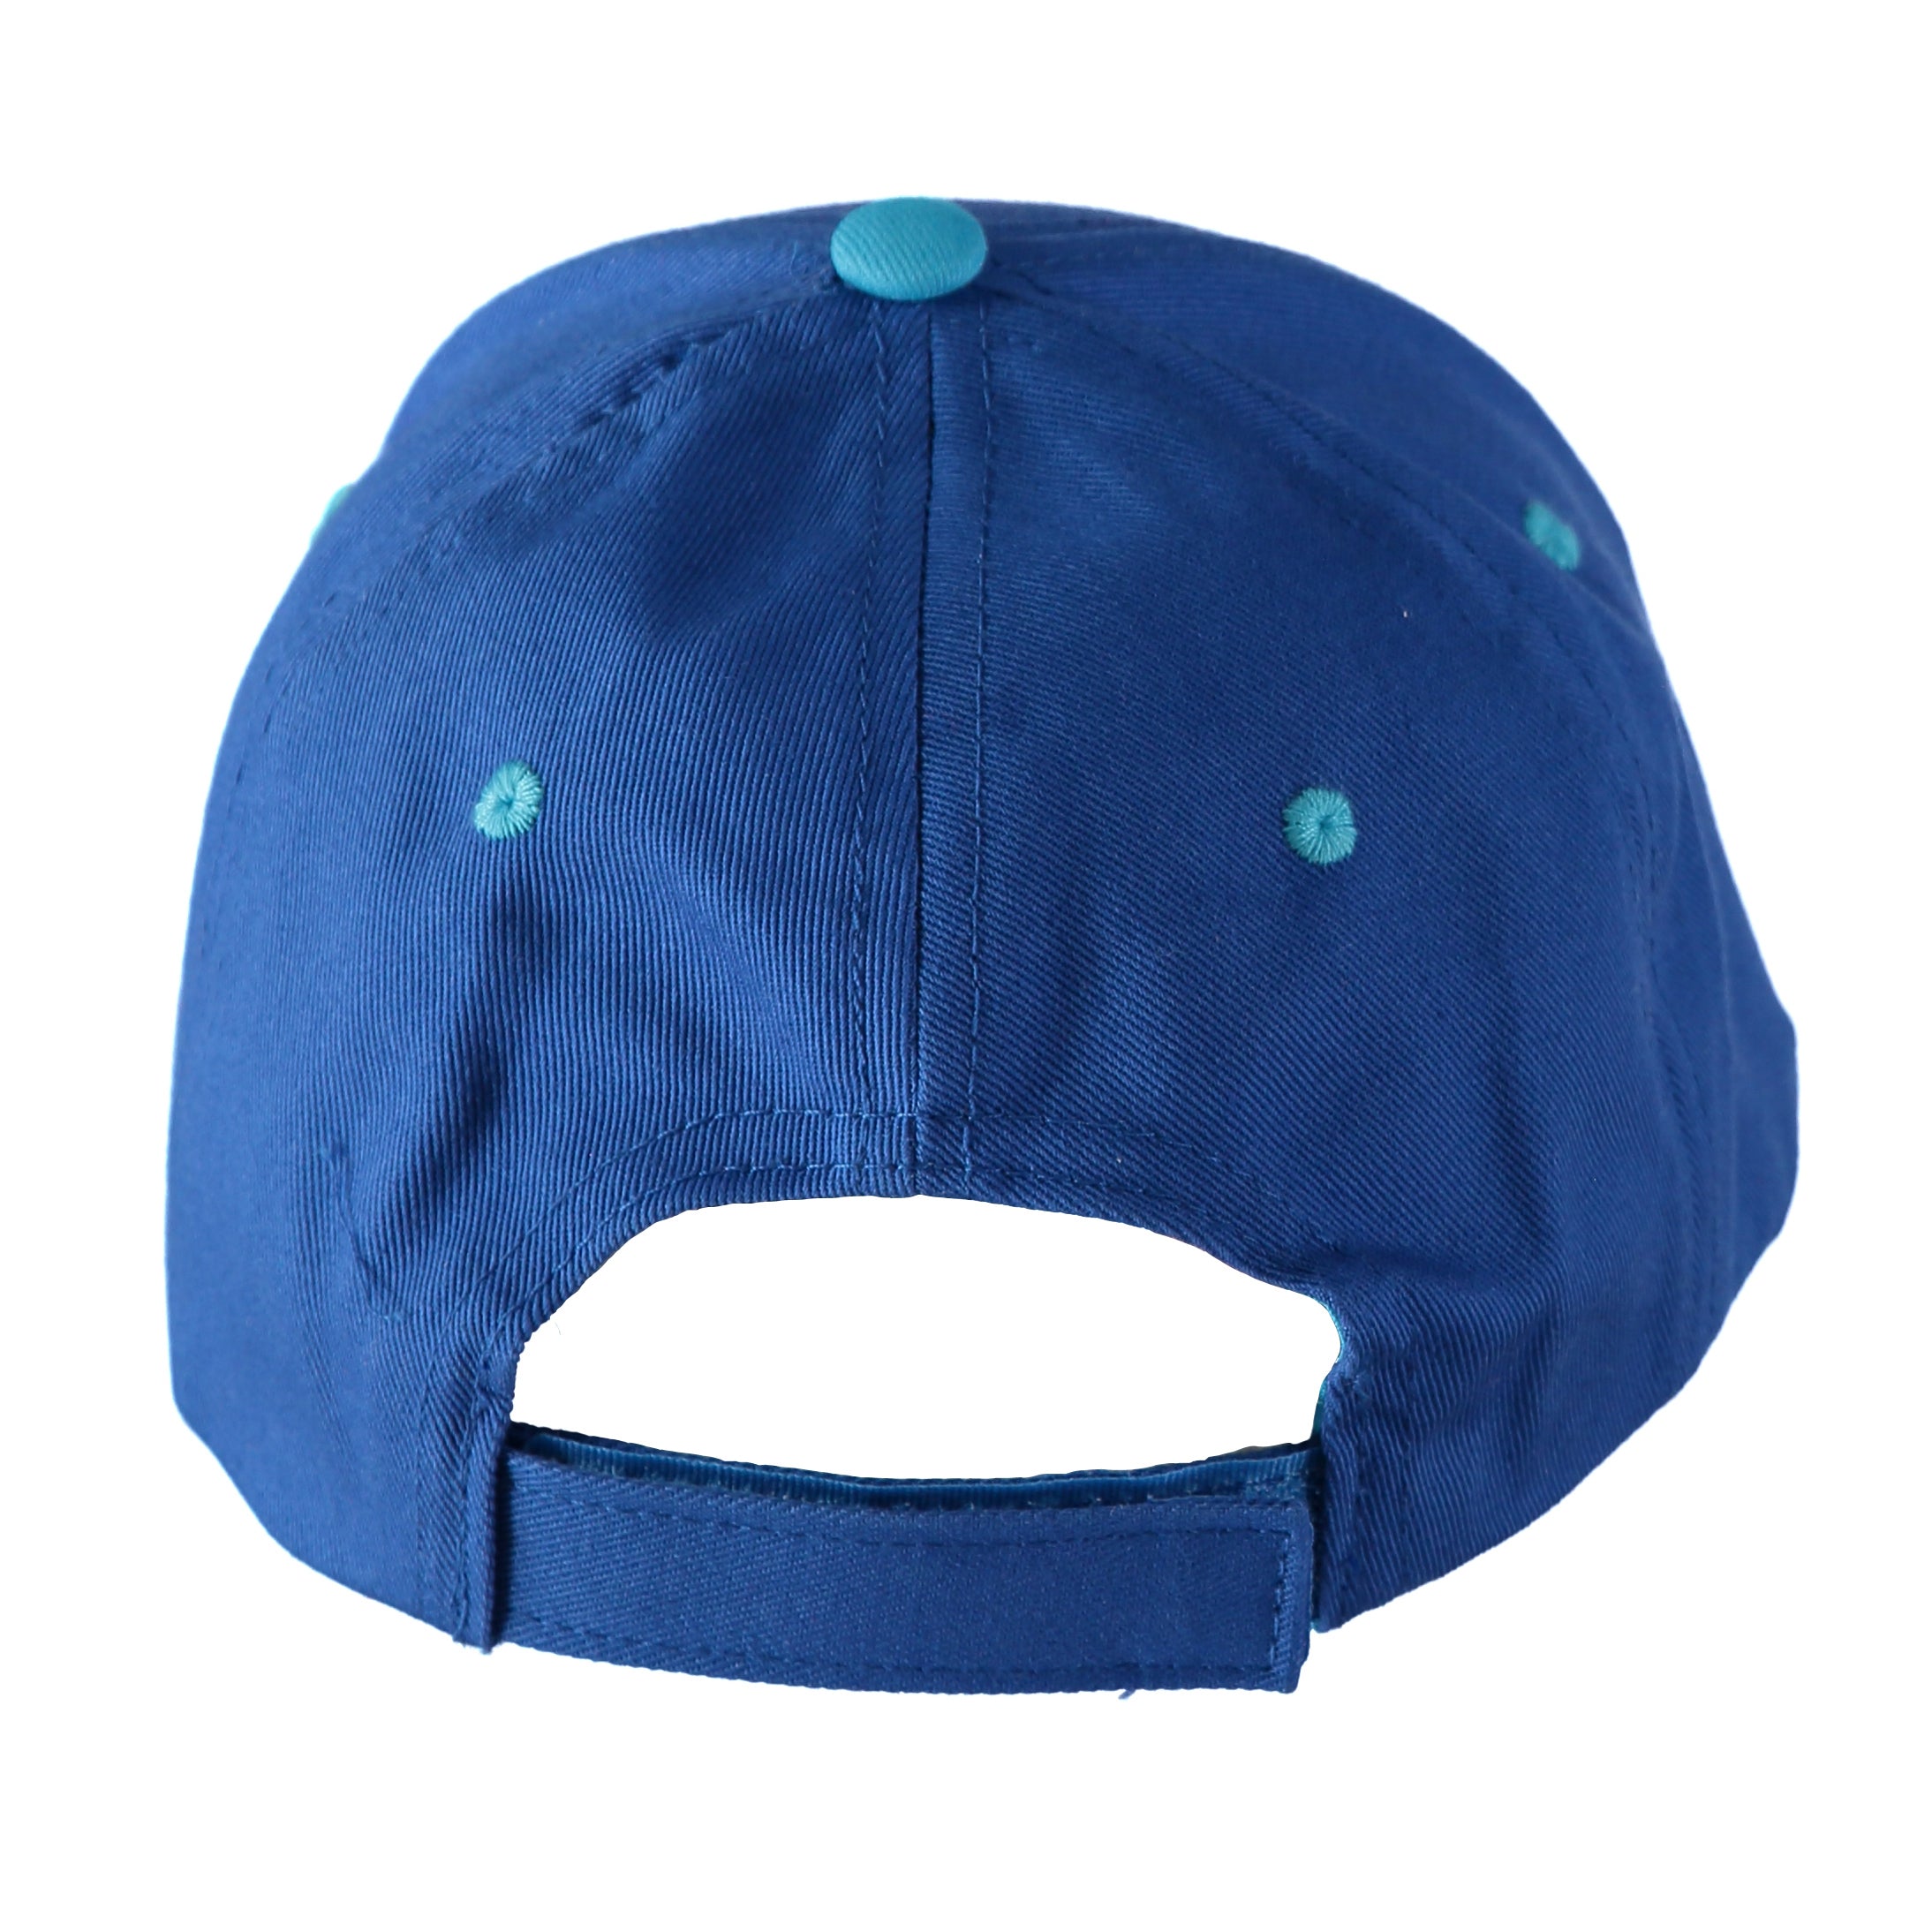 PJ Masks Baseball Cap, Toddler